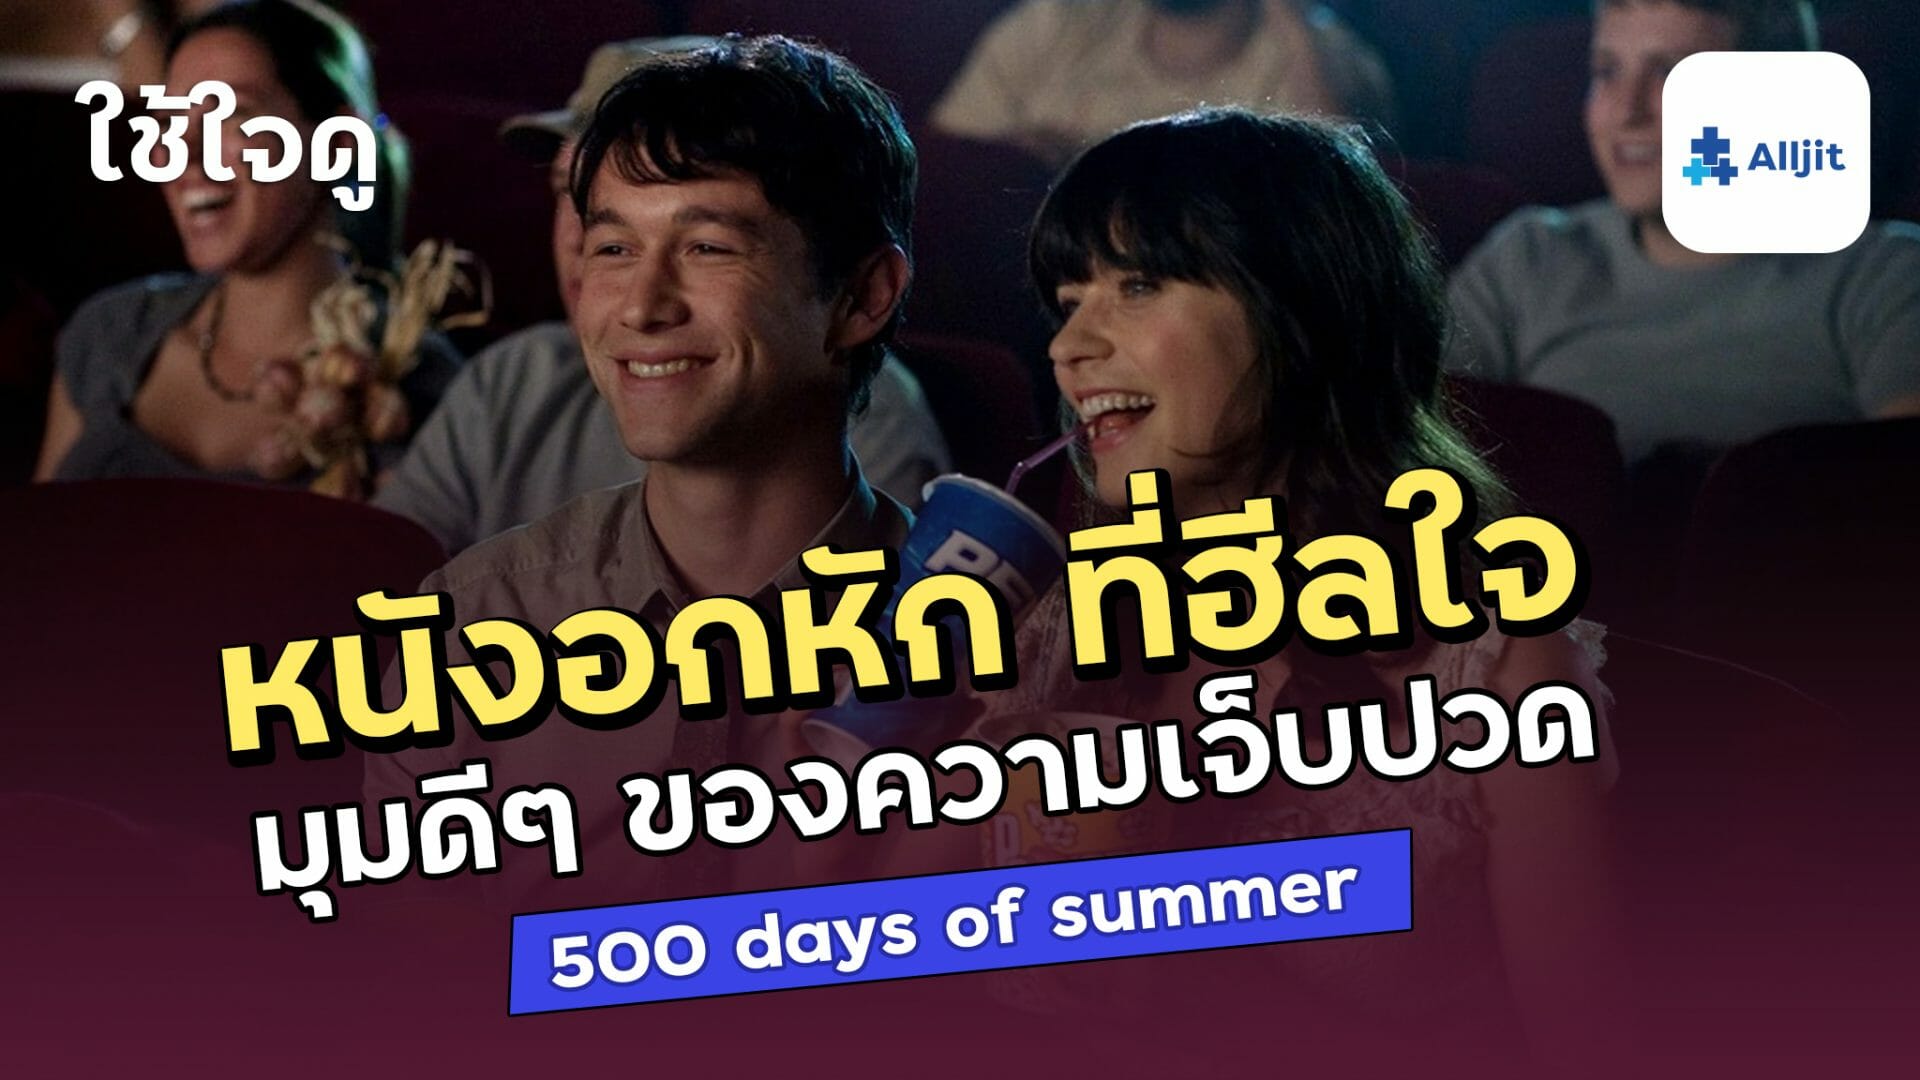 500 days of summer